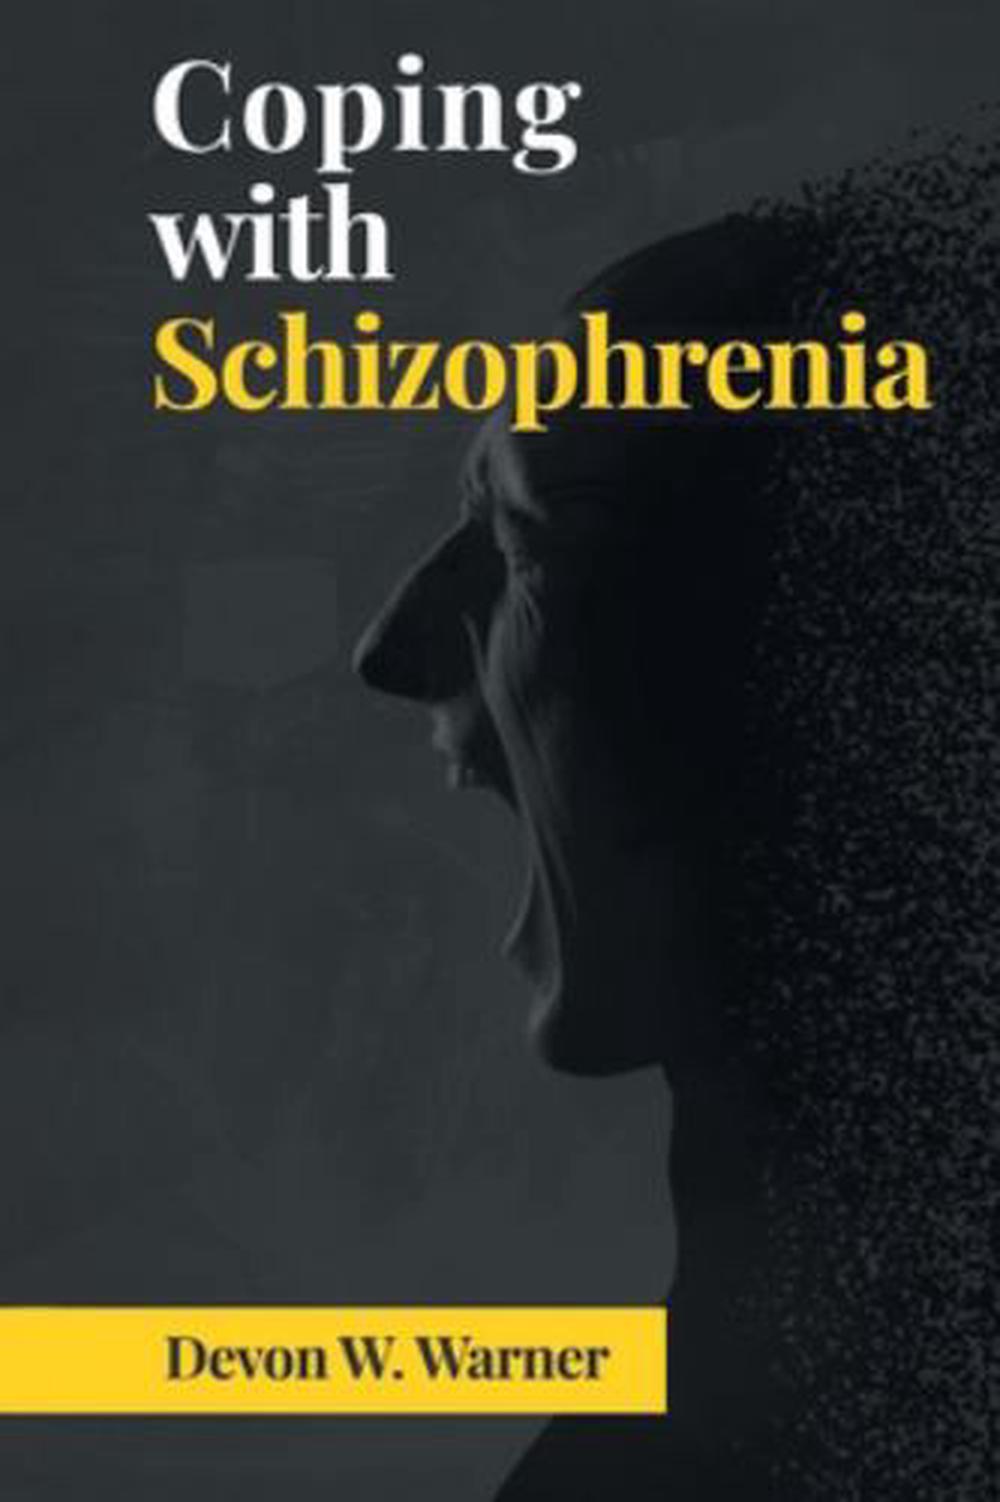 research books on schizophrenia